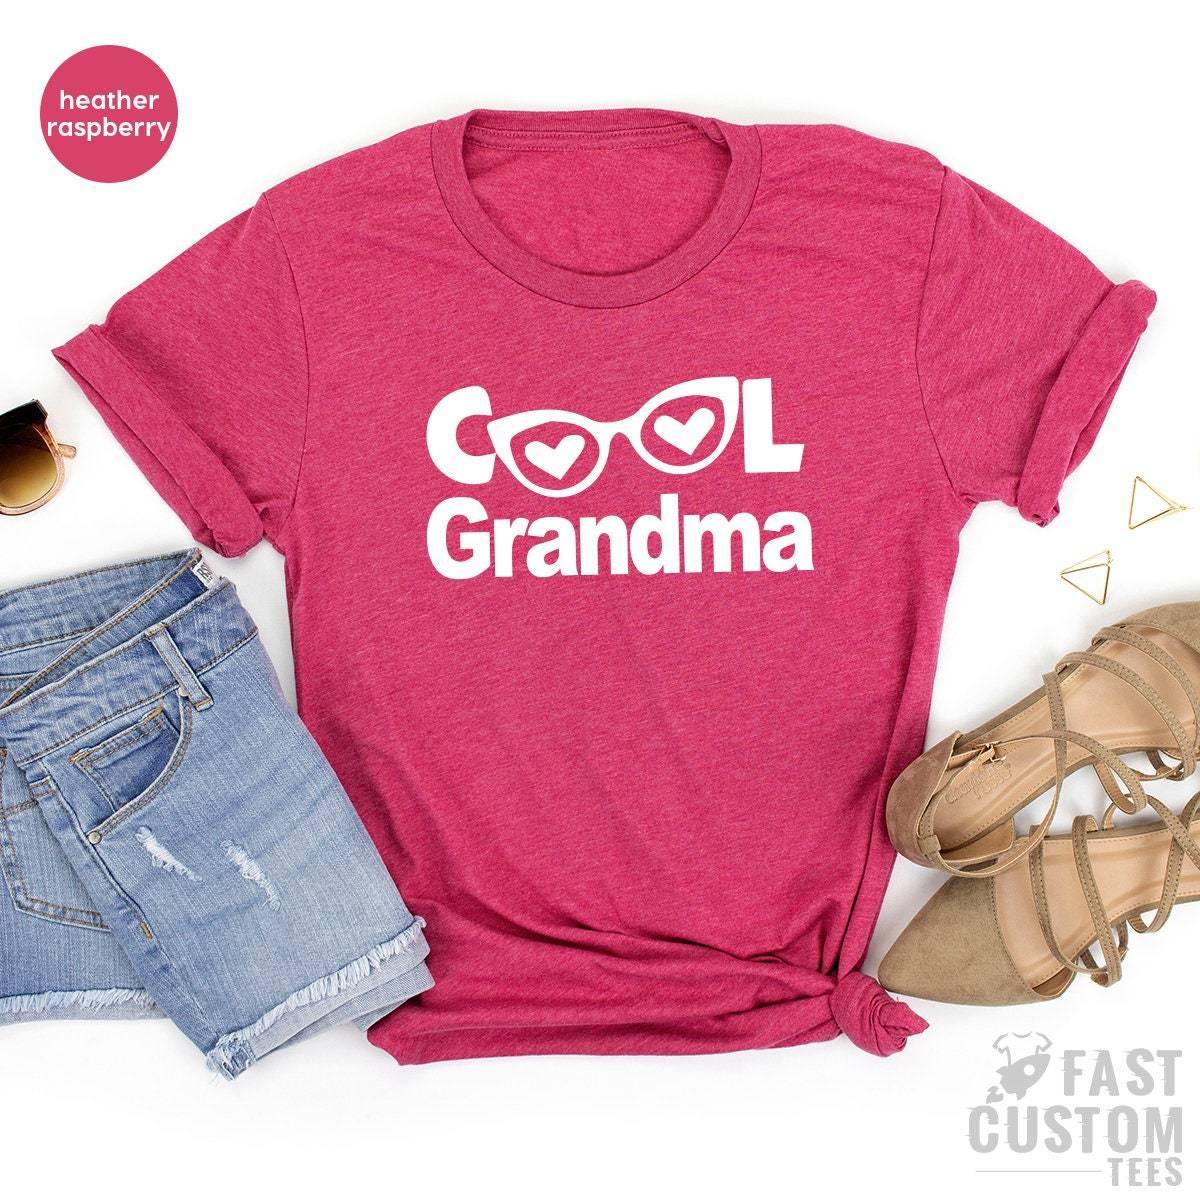 Cool Grandma Shirt, Grandma TShirt, Funny Grandma Shirts, Grandmother Gifts, Gigi T Shirt, Nana Mothers Day Gifts, Best Nana T Shirt - Fastdeliverytees.com